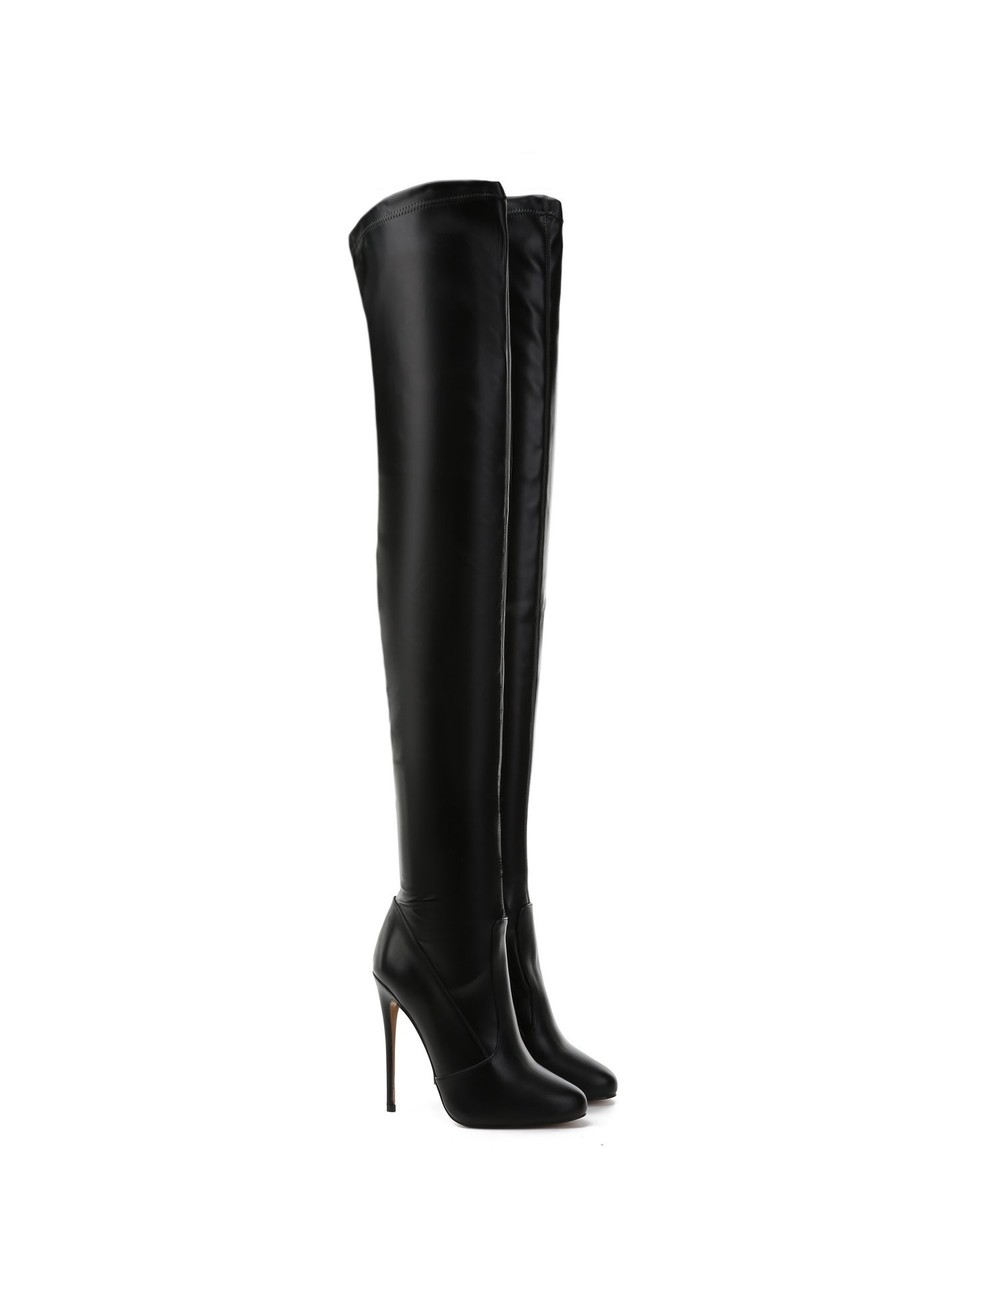 Giaro BELINDA BLACK MATTE THIGH BOOTS - Shoebidoo Shoes | Giaro high heels